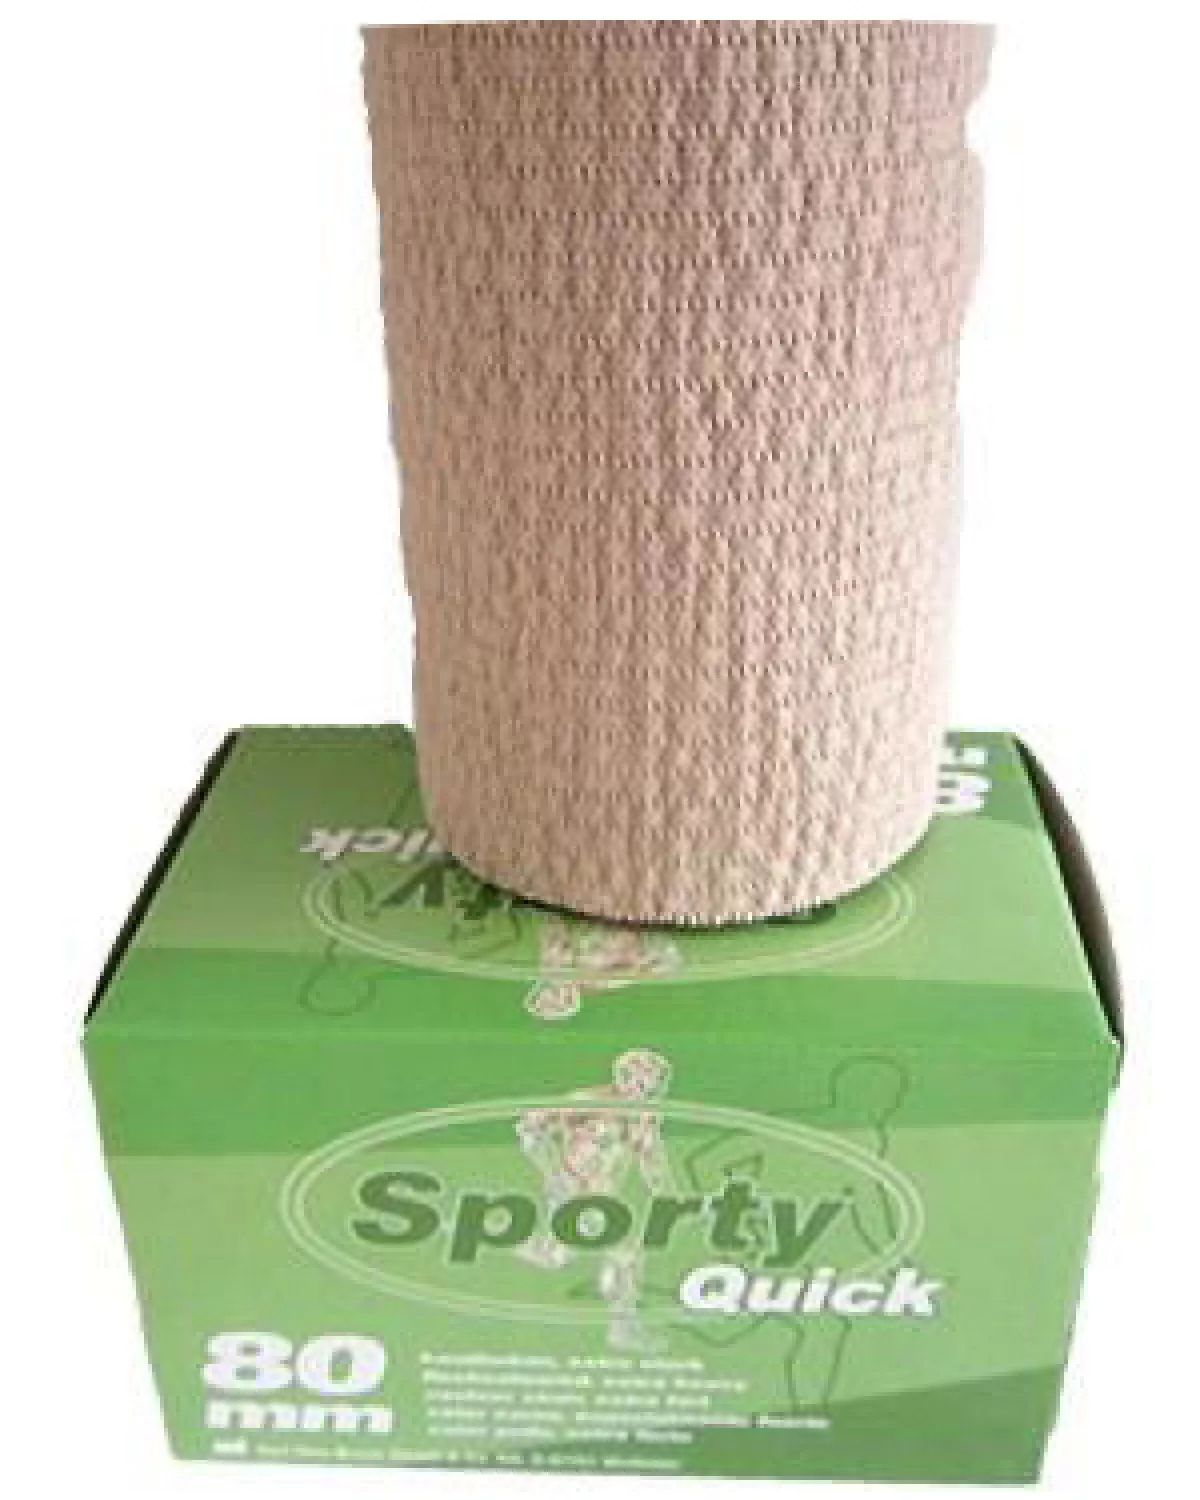 #1 - Sporty Quick Bandage 8cm